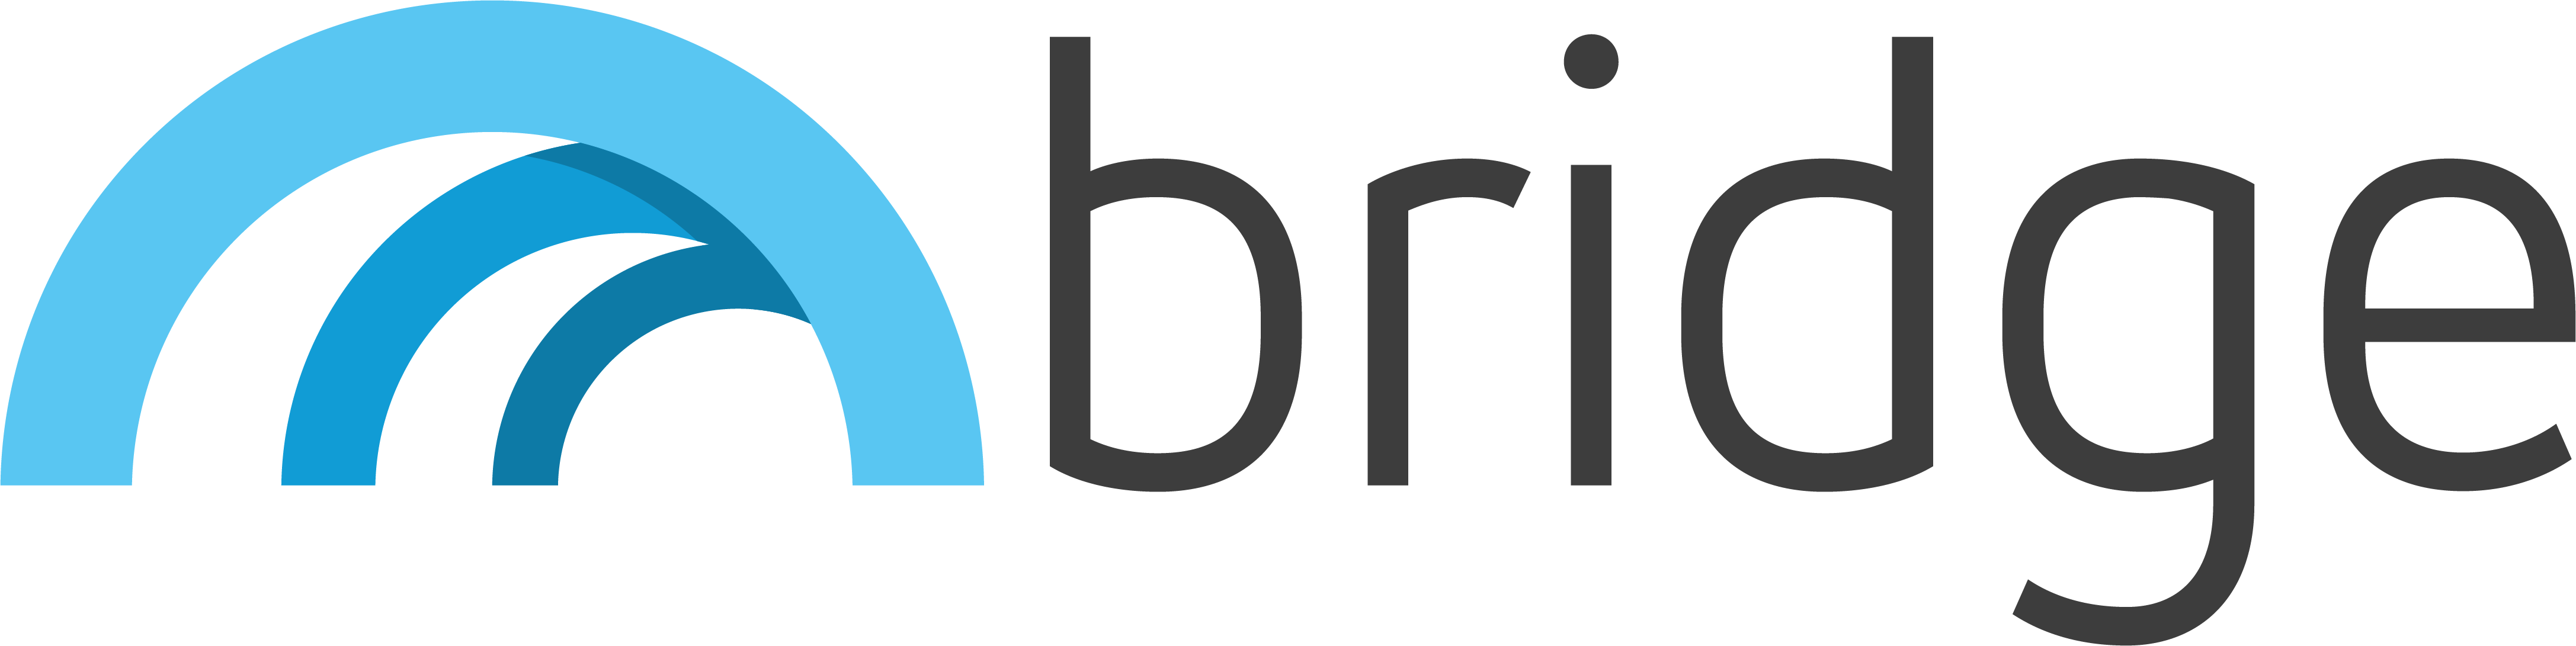 Bridge Wallet Logo